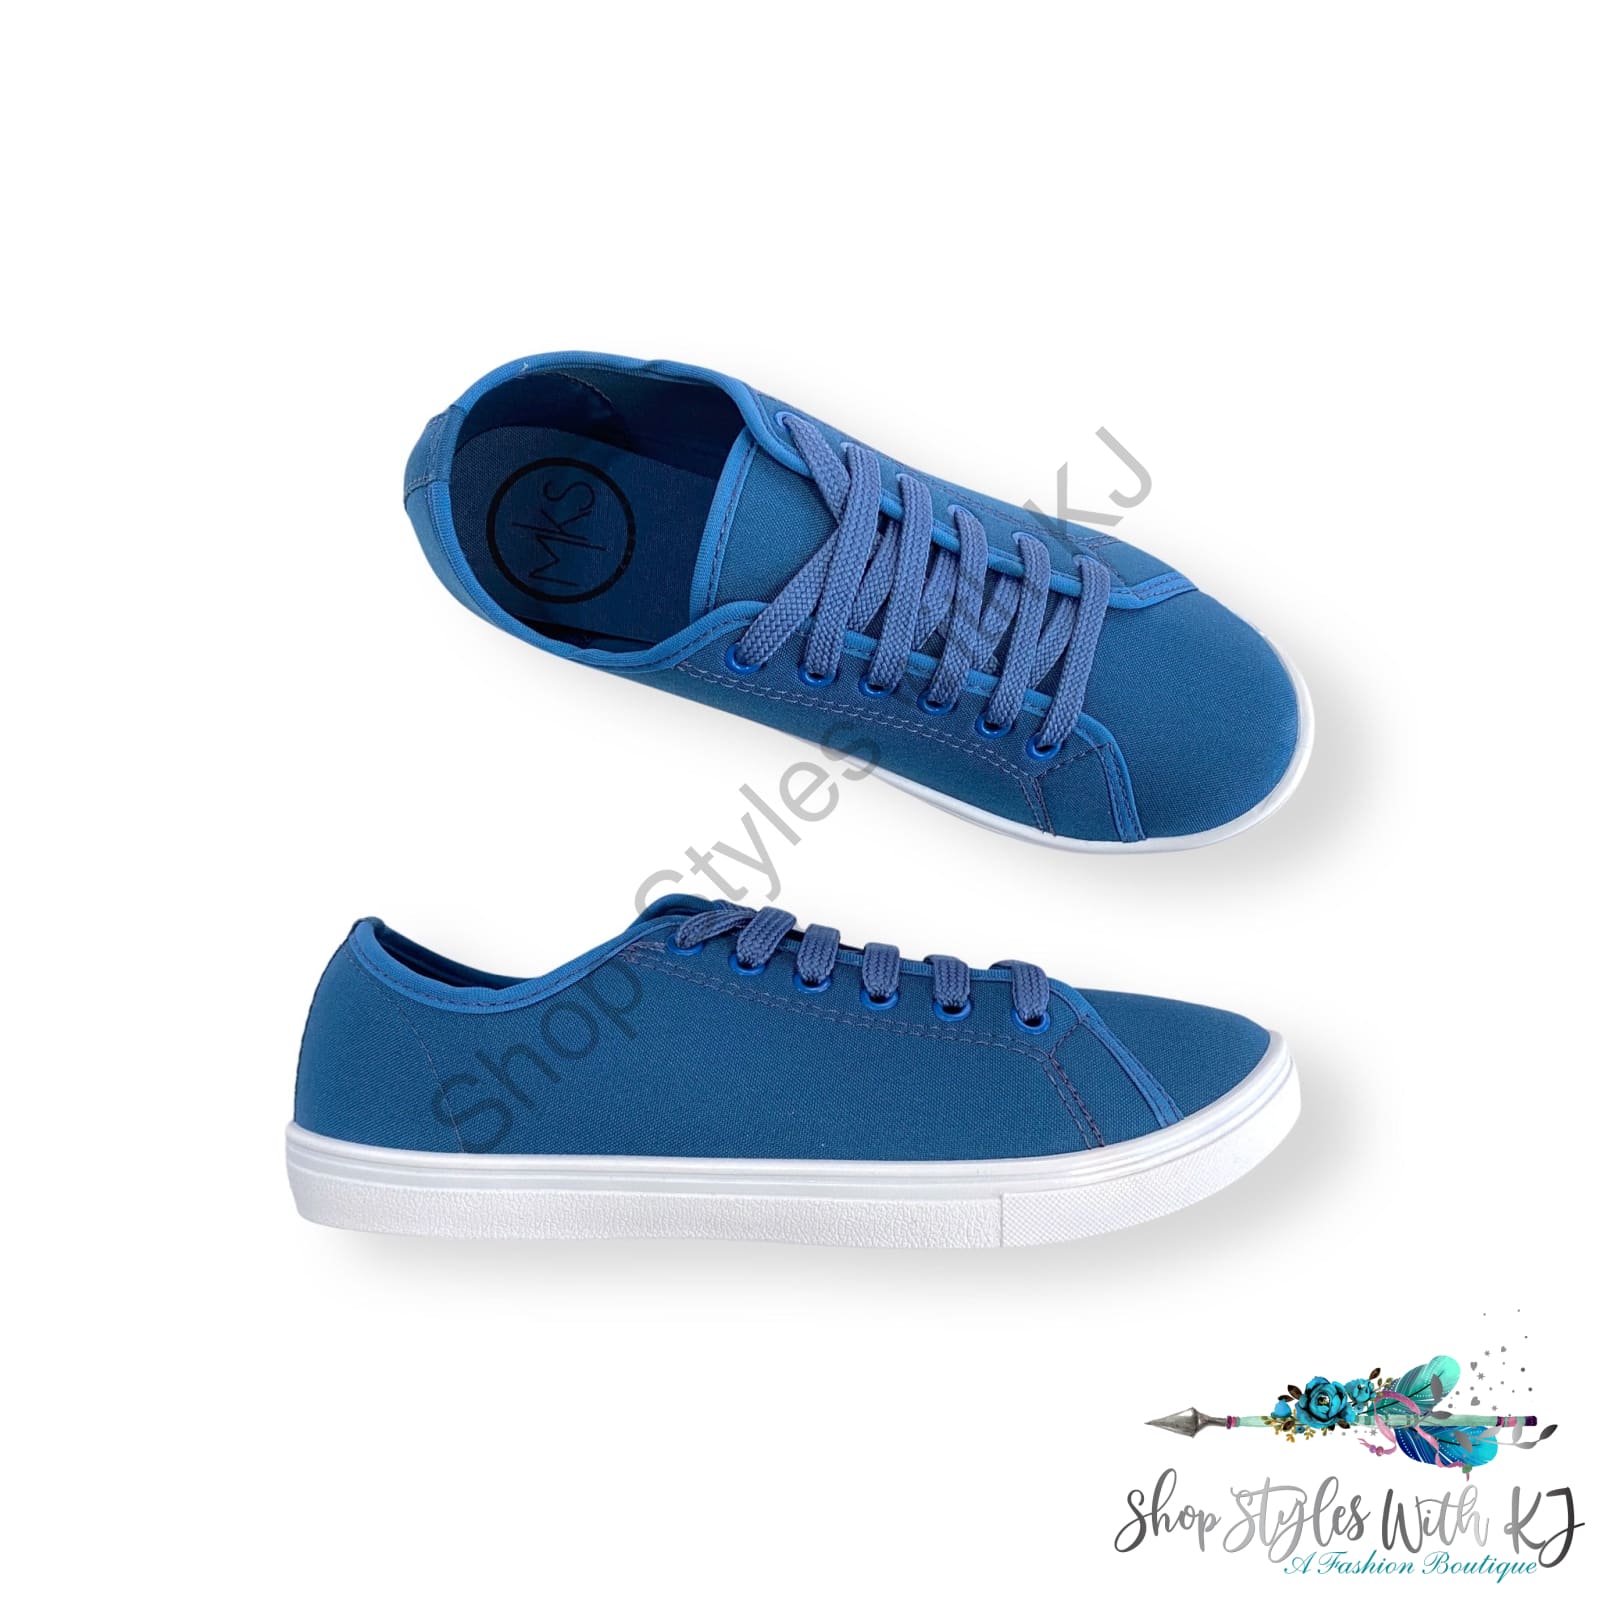 Free Spirit Sneakers In Blue Enriko